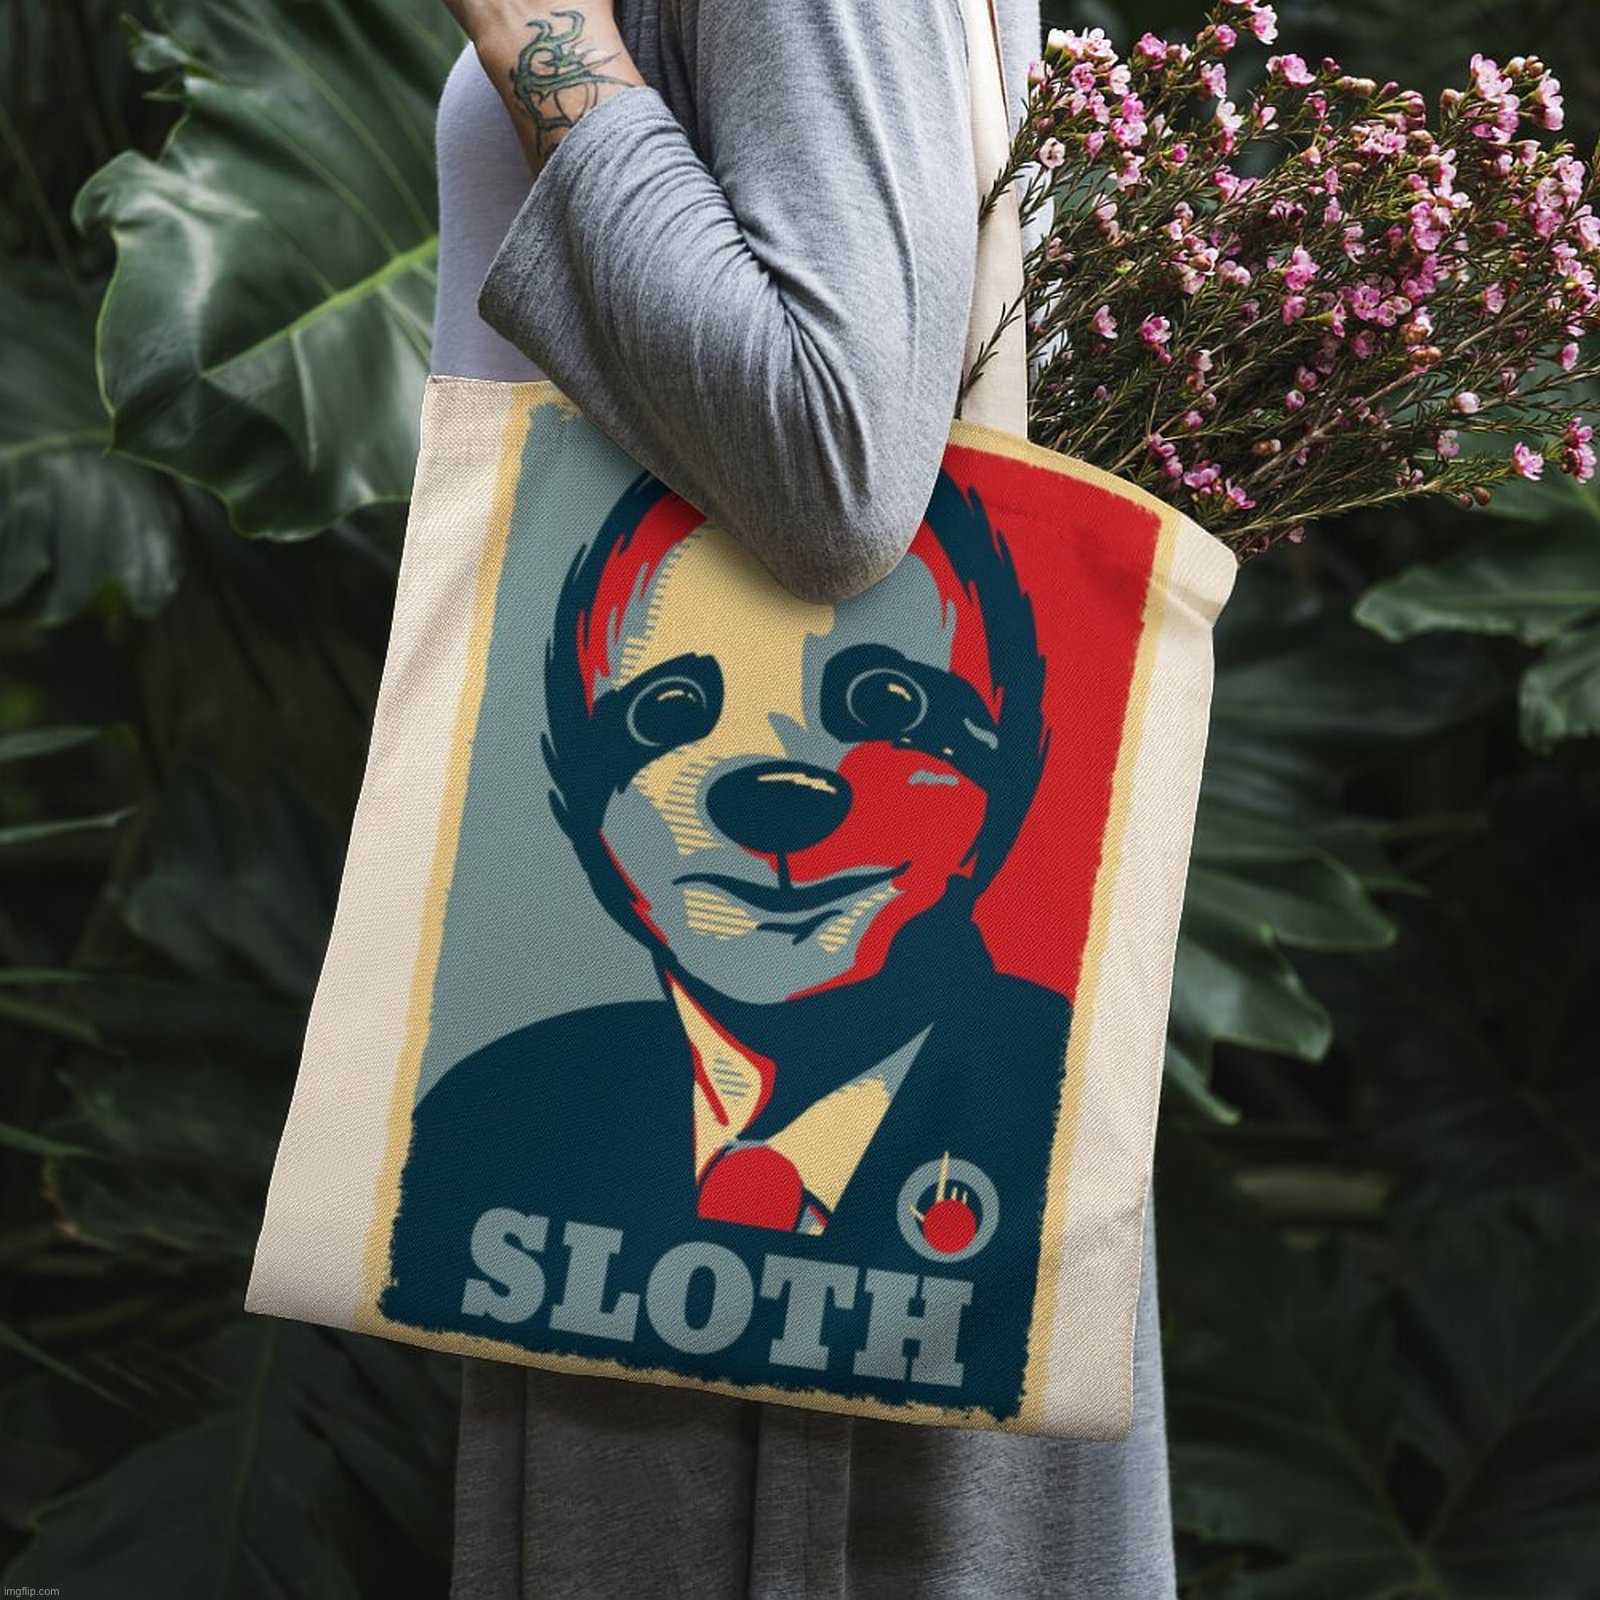 Sloth poster on handbag | image tagged in sloth poster on handbag | made w/ Imgflip meme maker